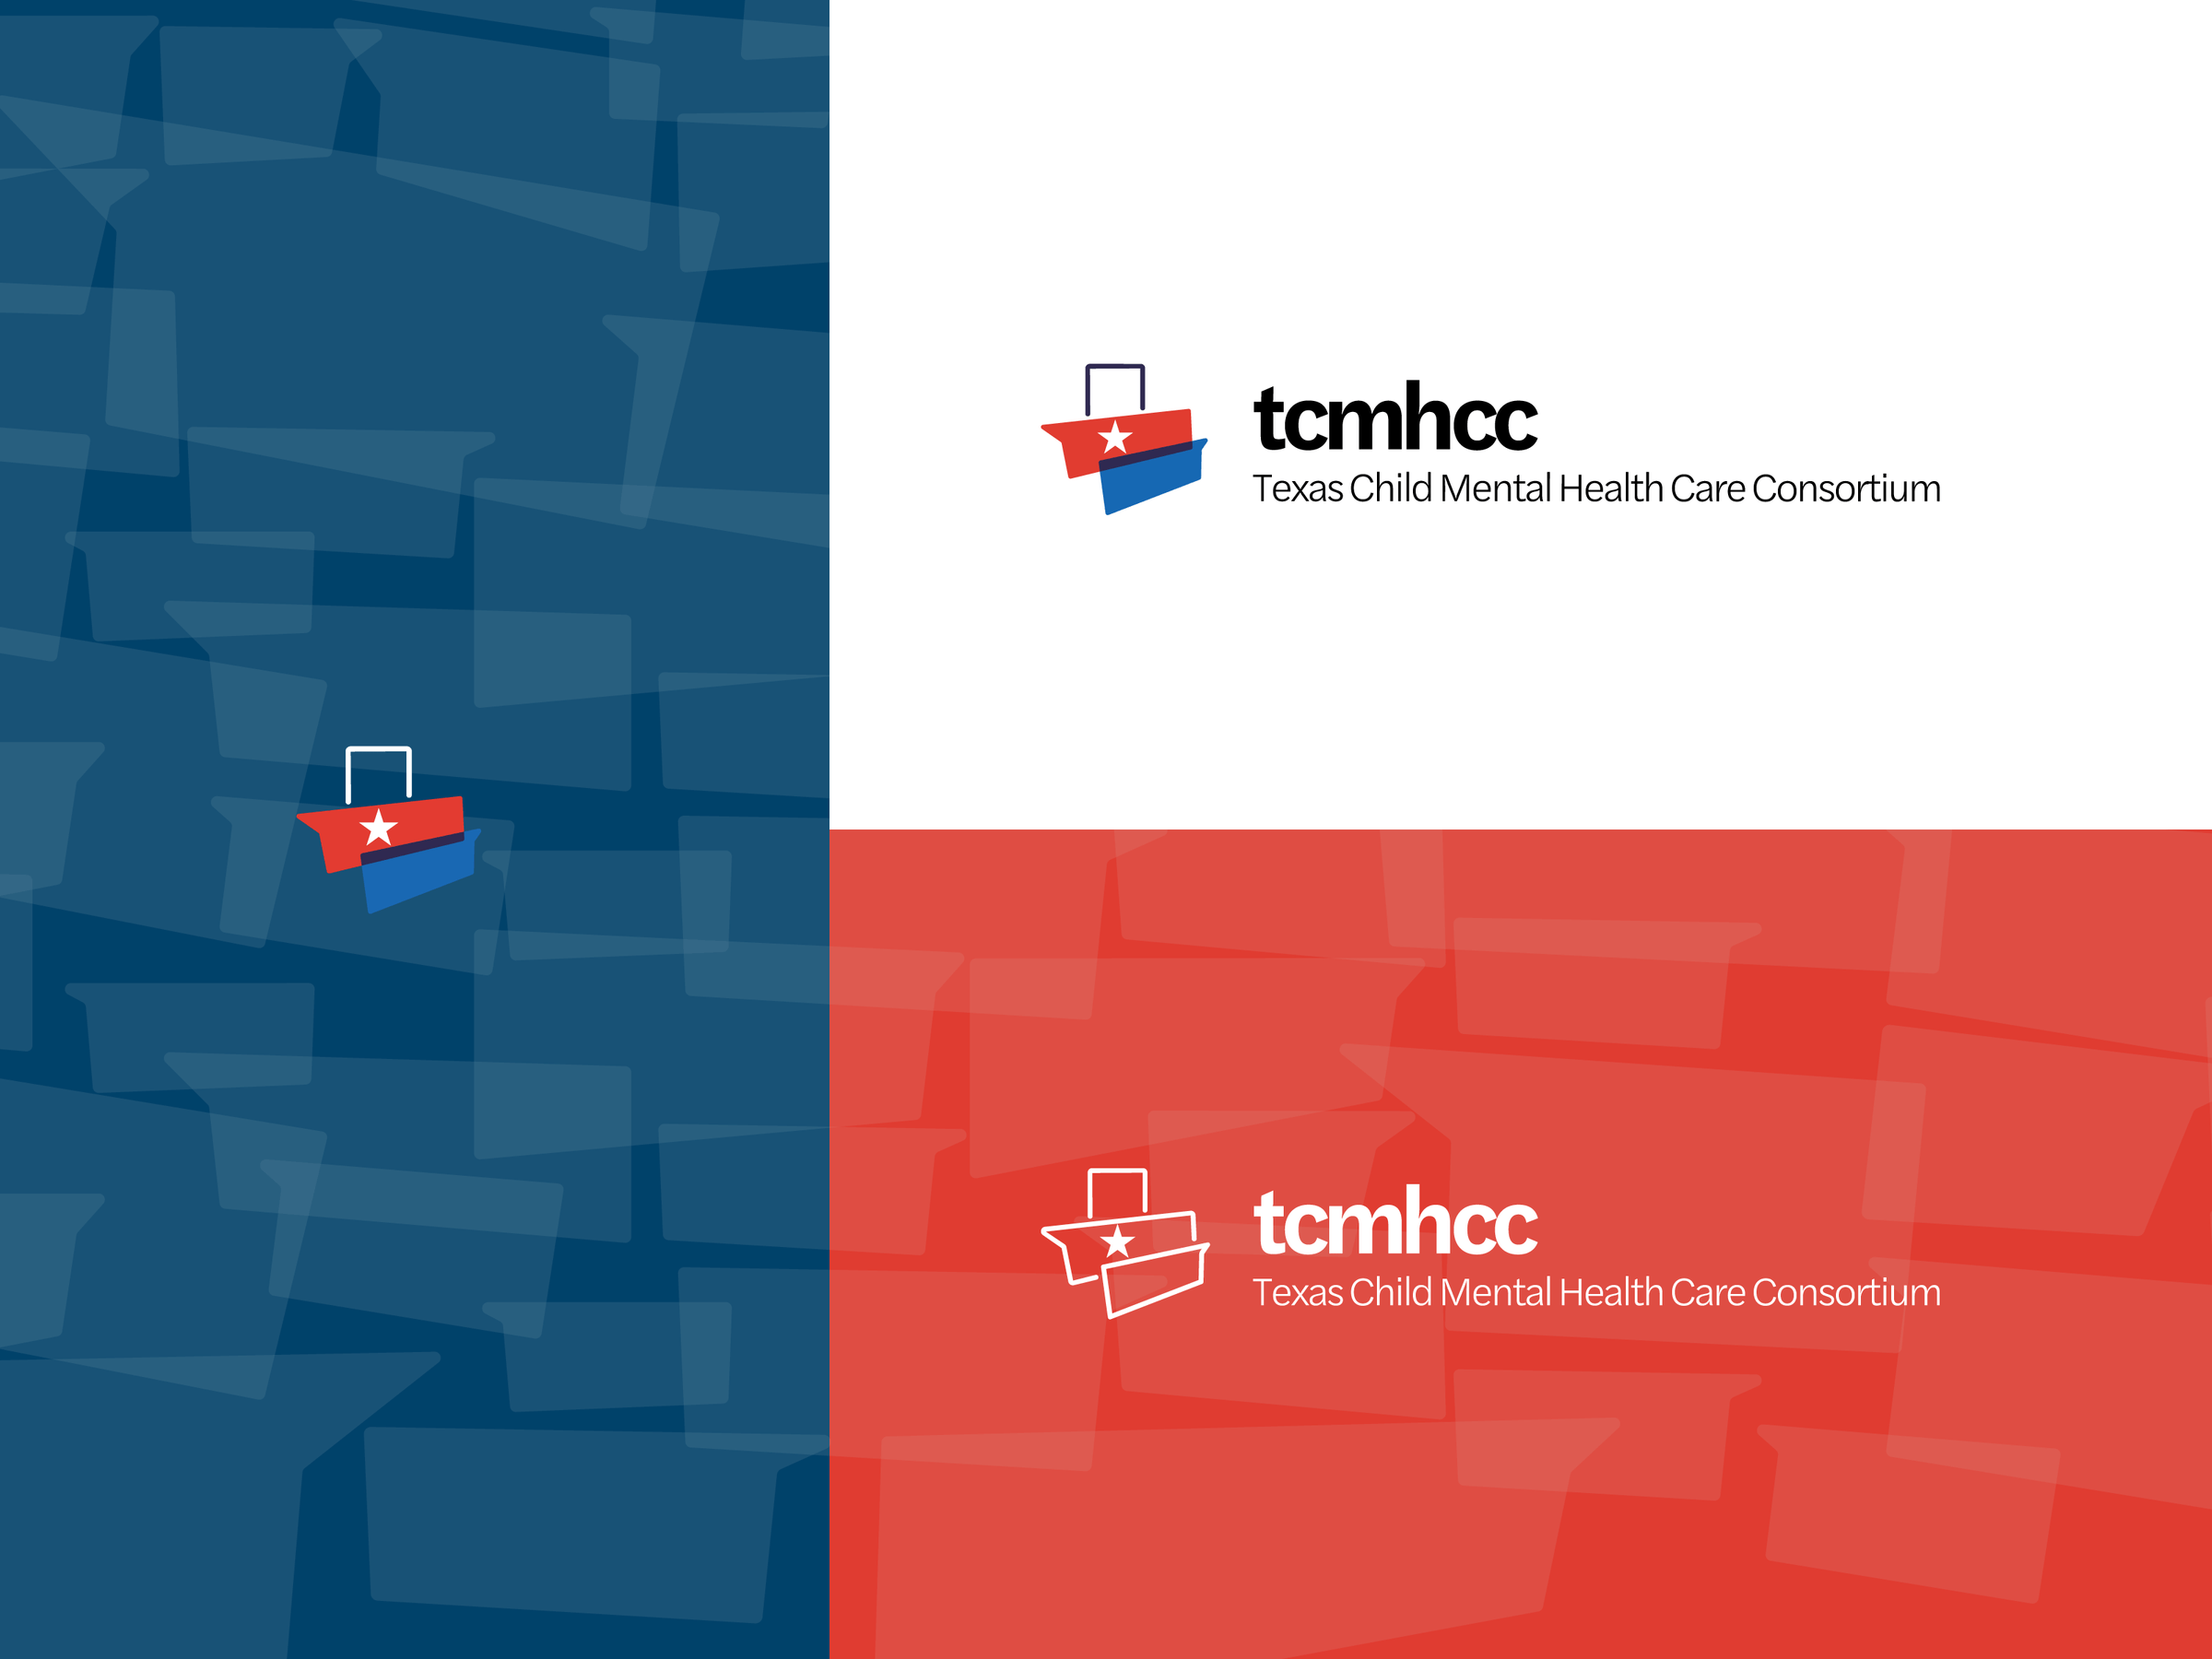 Texas Child Mental Health Care Consortium final logo presentation